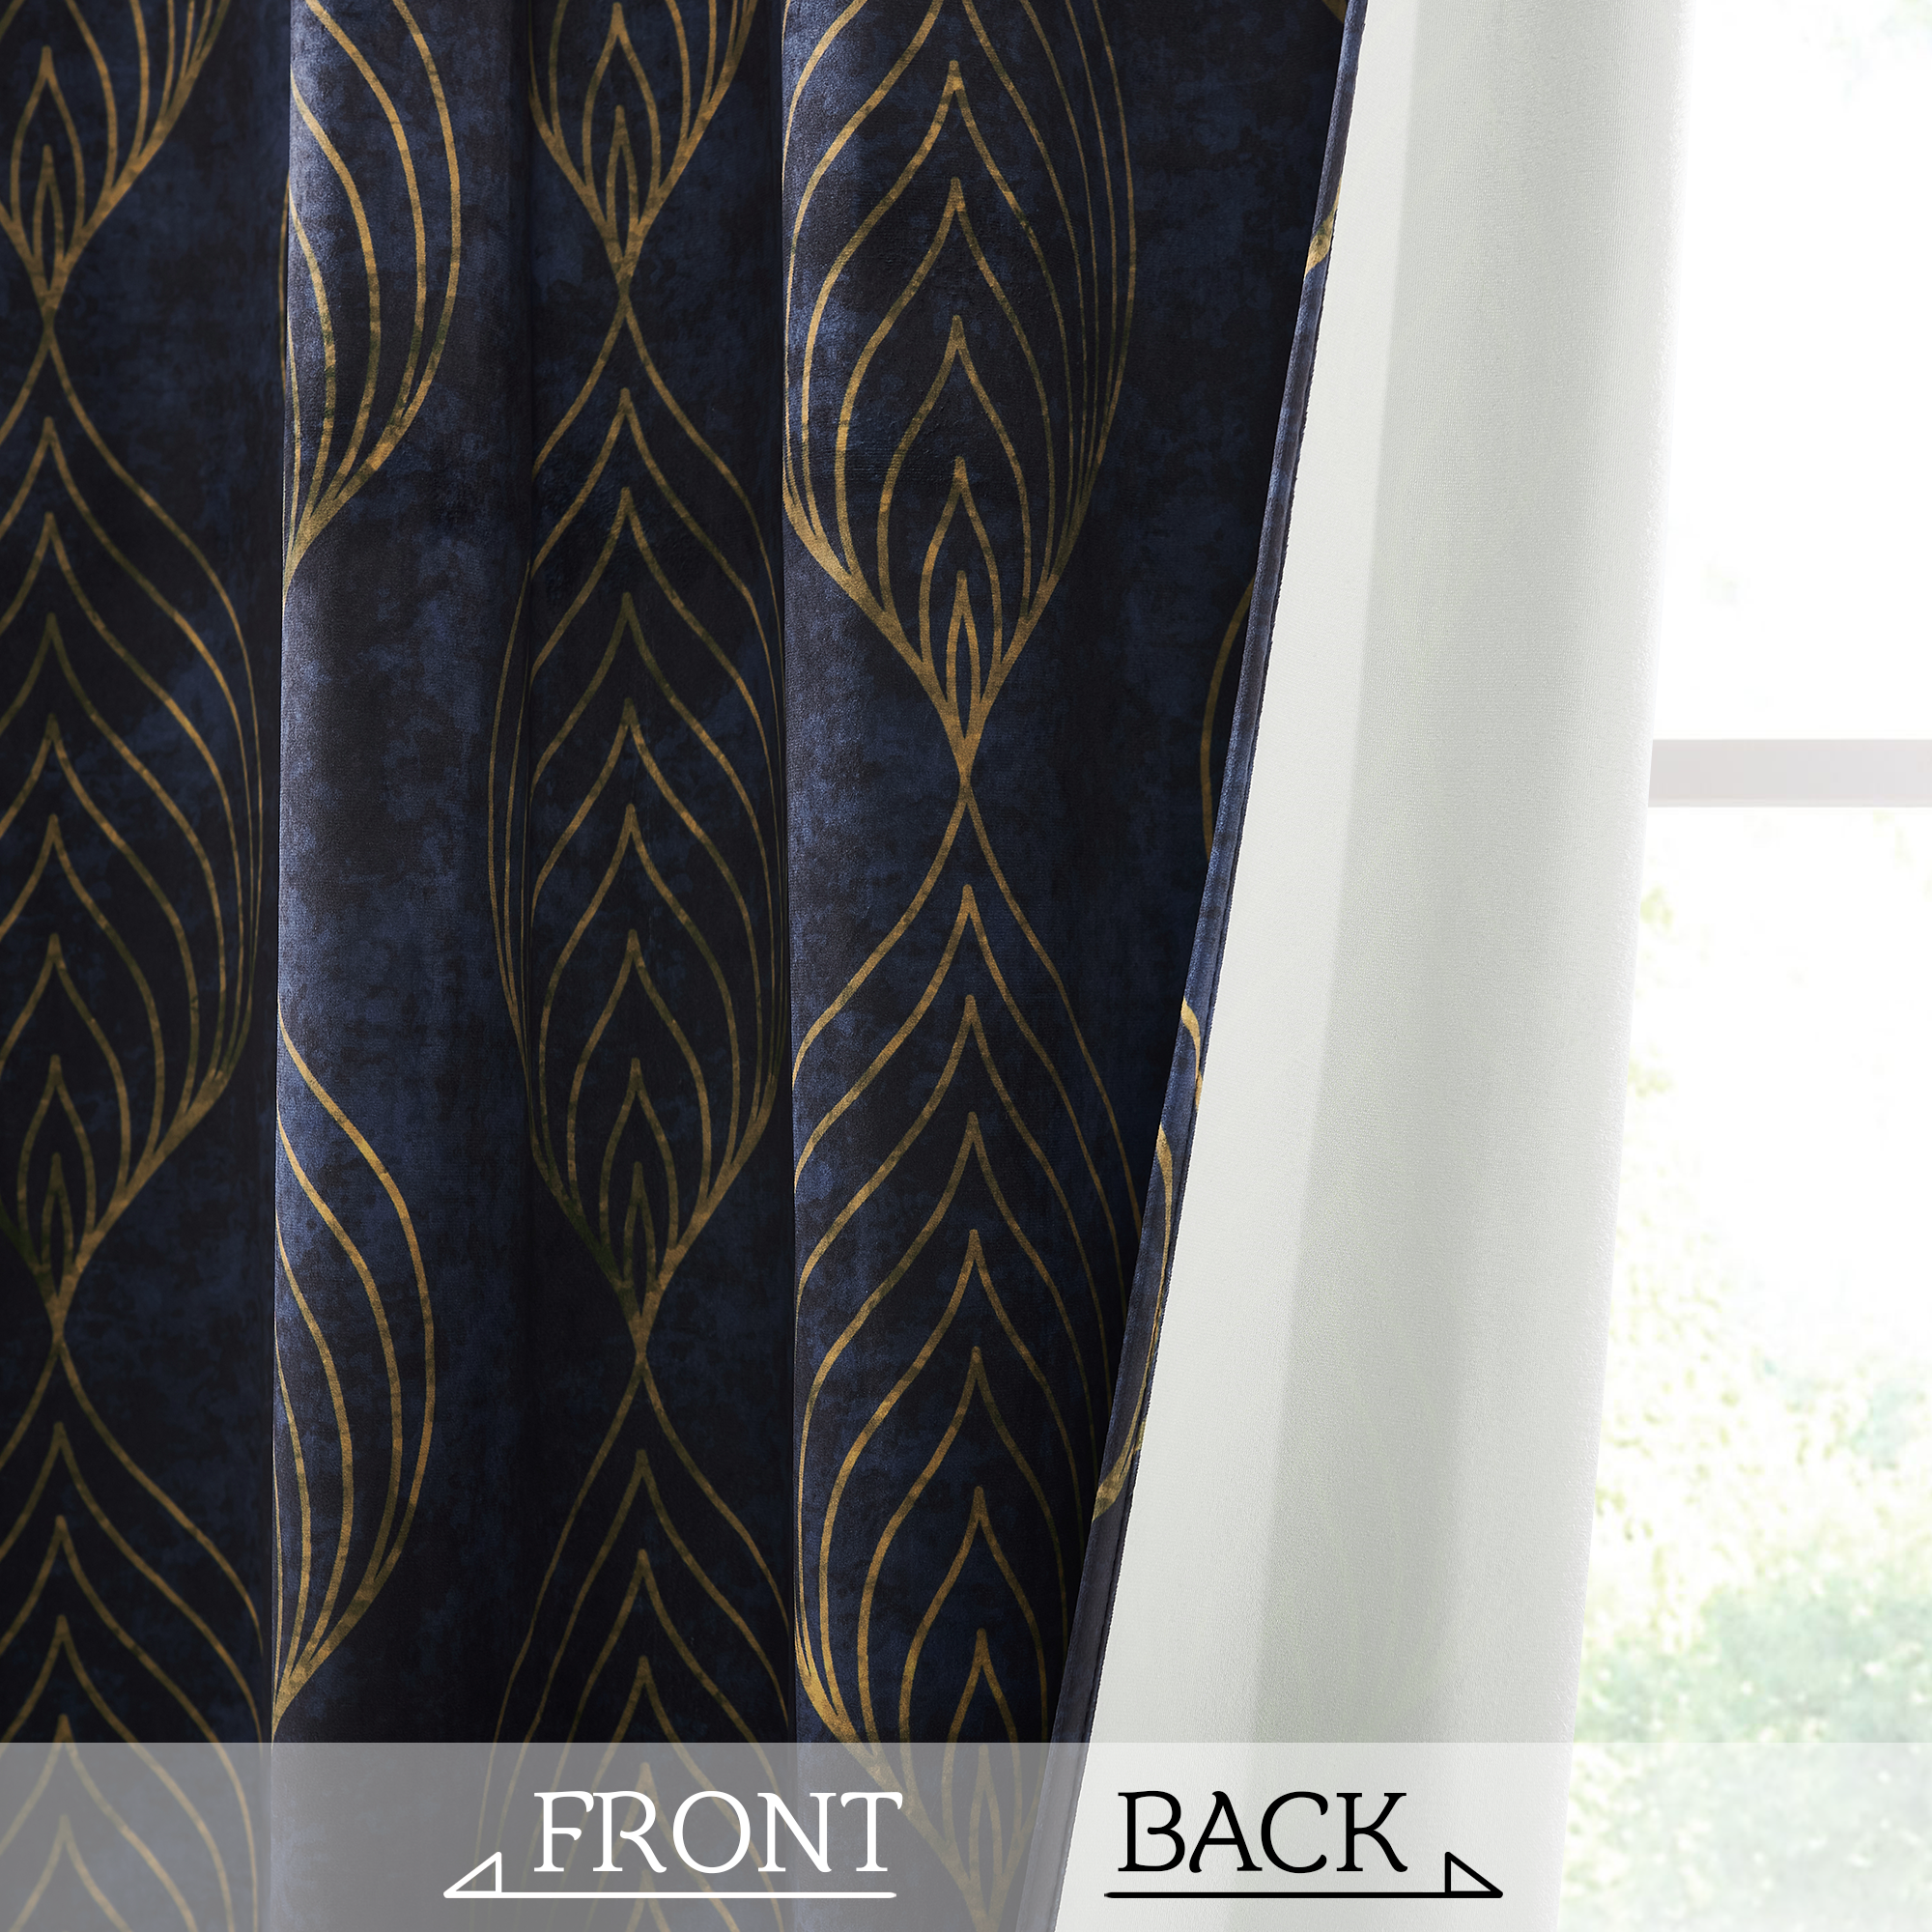 Artistic Leaves Vein Pattern Blackout Velvet Curtains For Living Room And Bedroom 2 Panels KGORGE Store